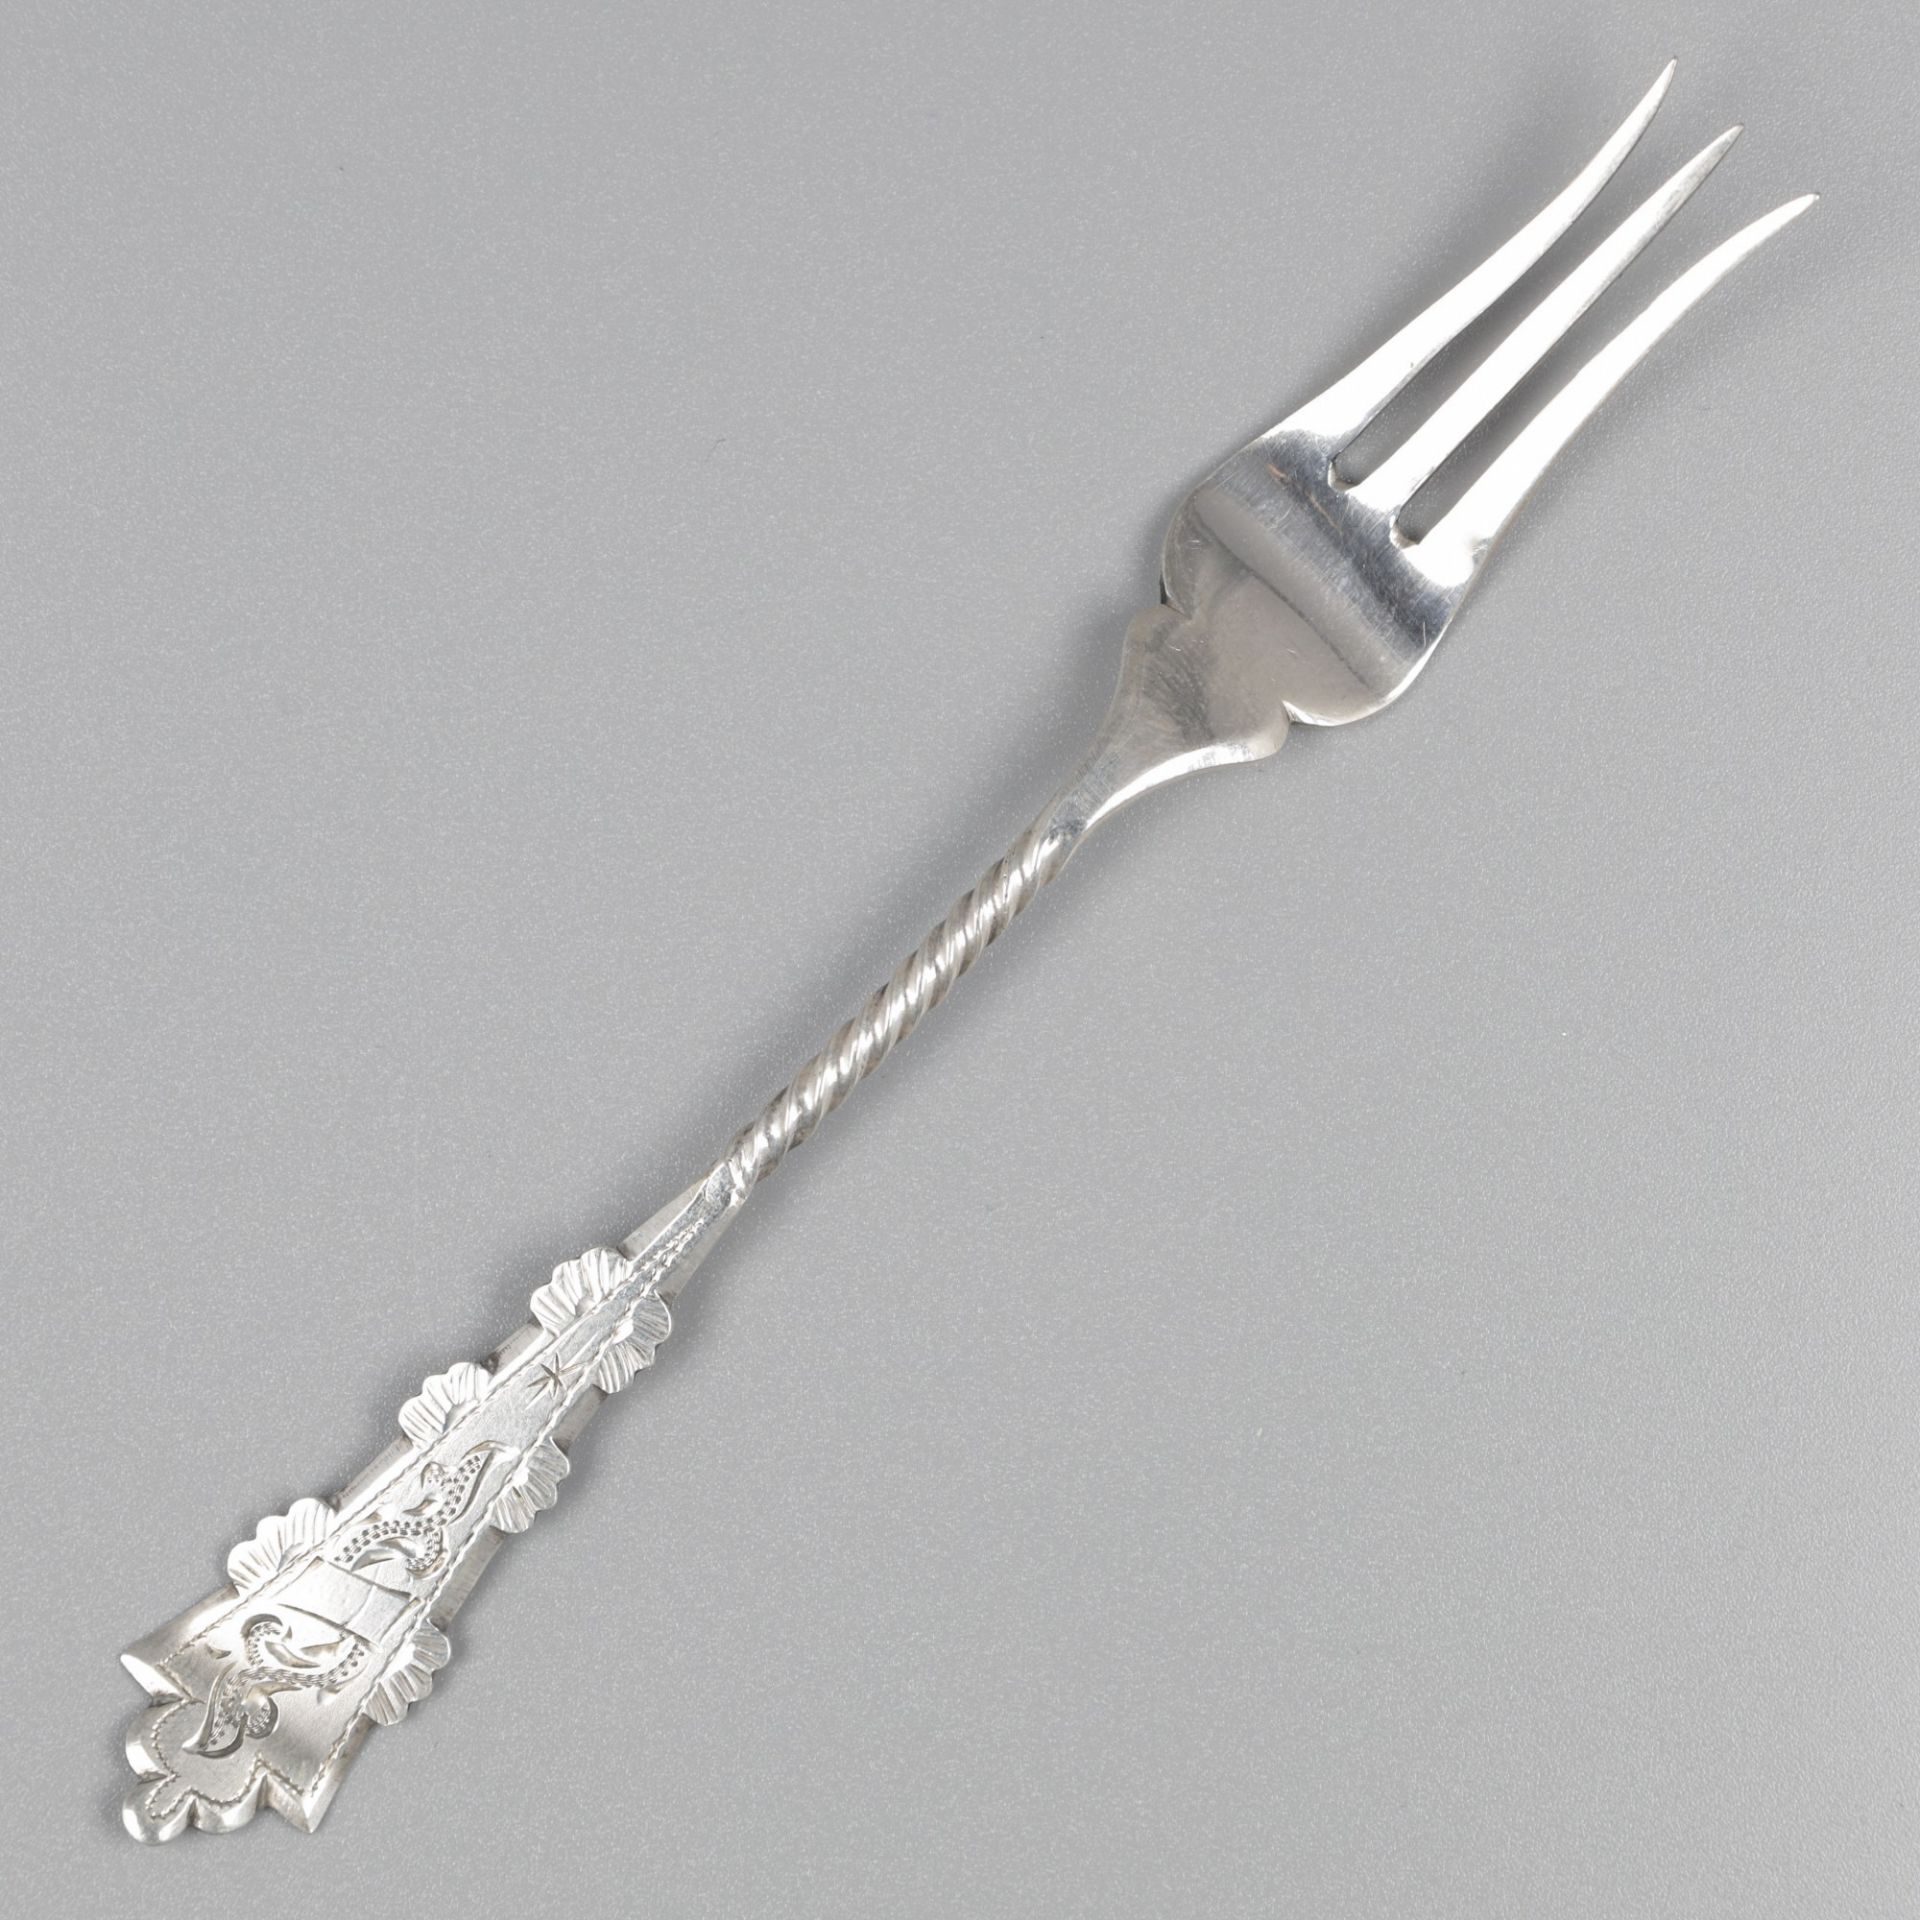 No reserve - 4-piece lot of pickle forks (2 sets) silver. - Image 2 of 6